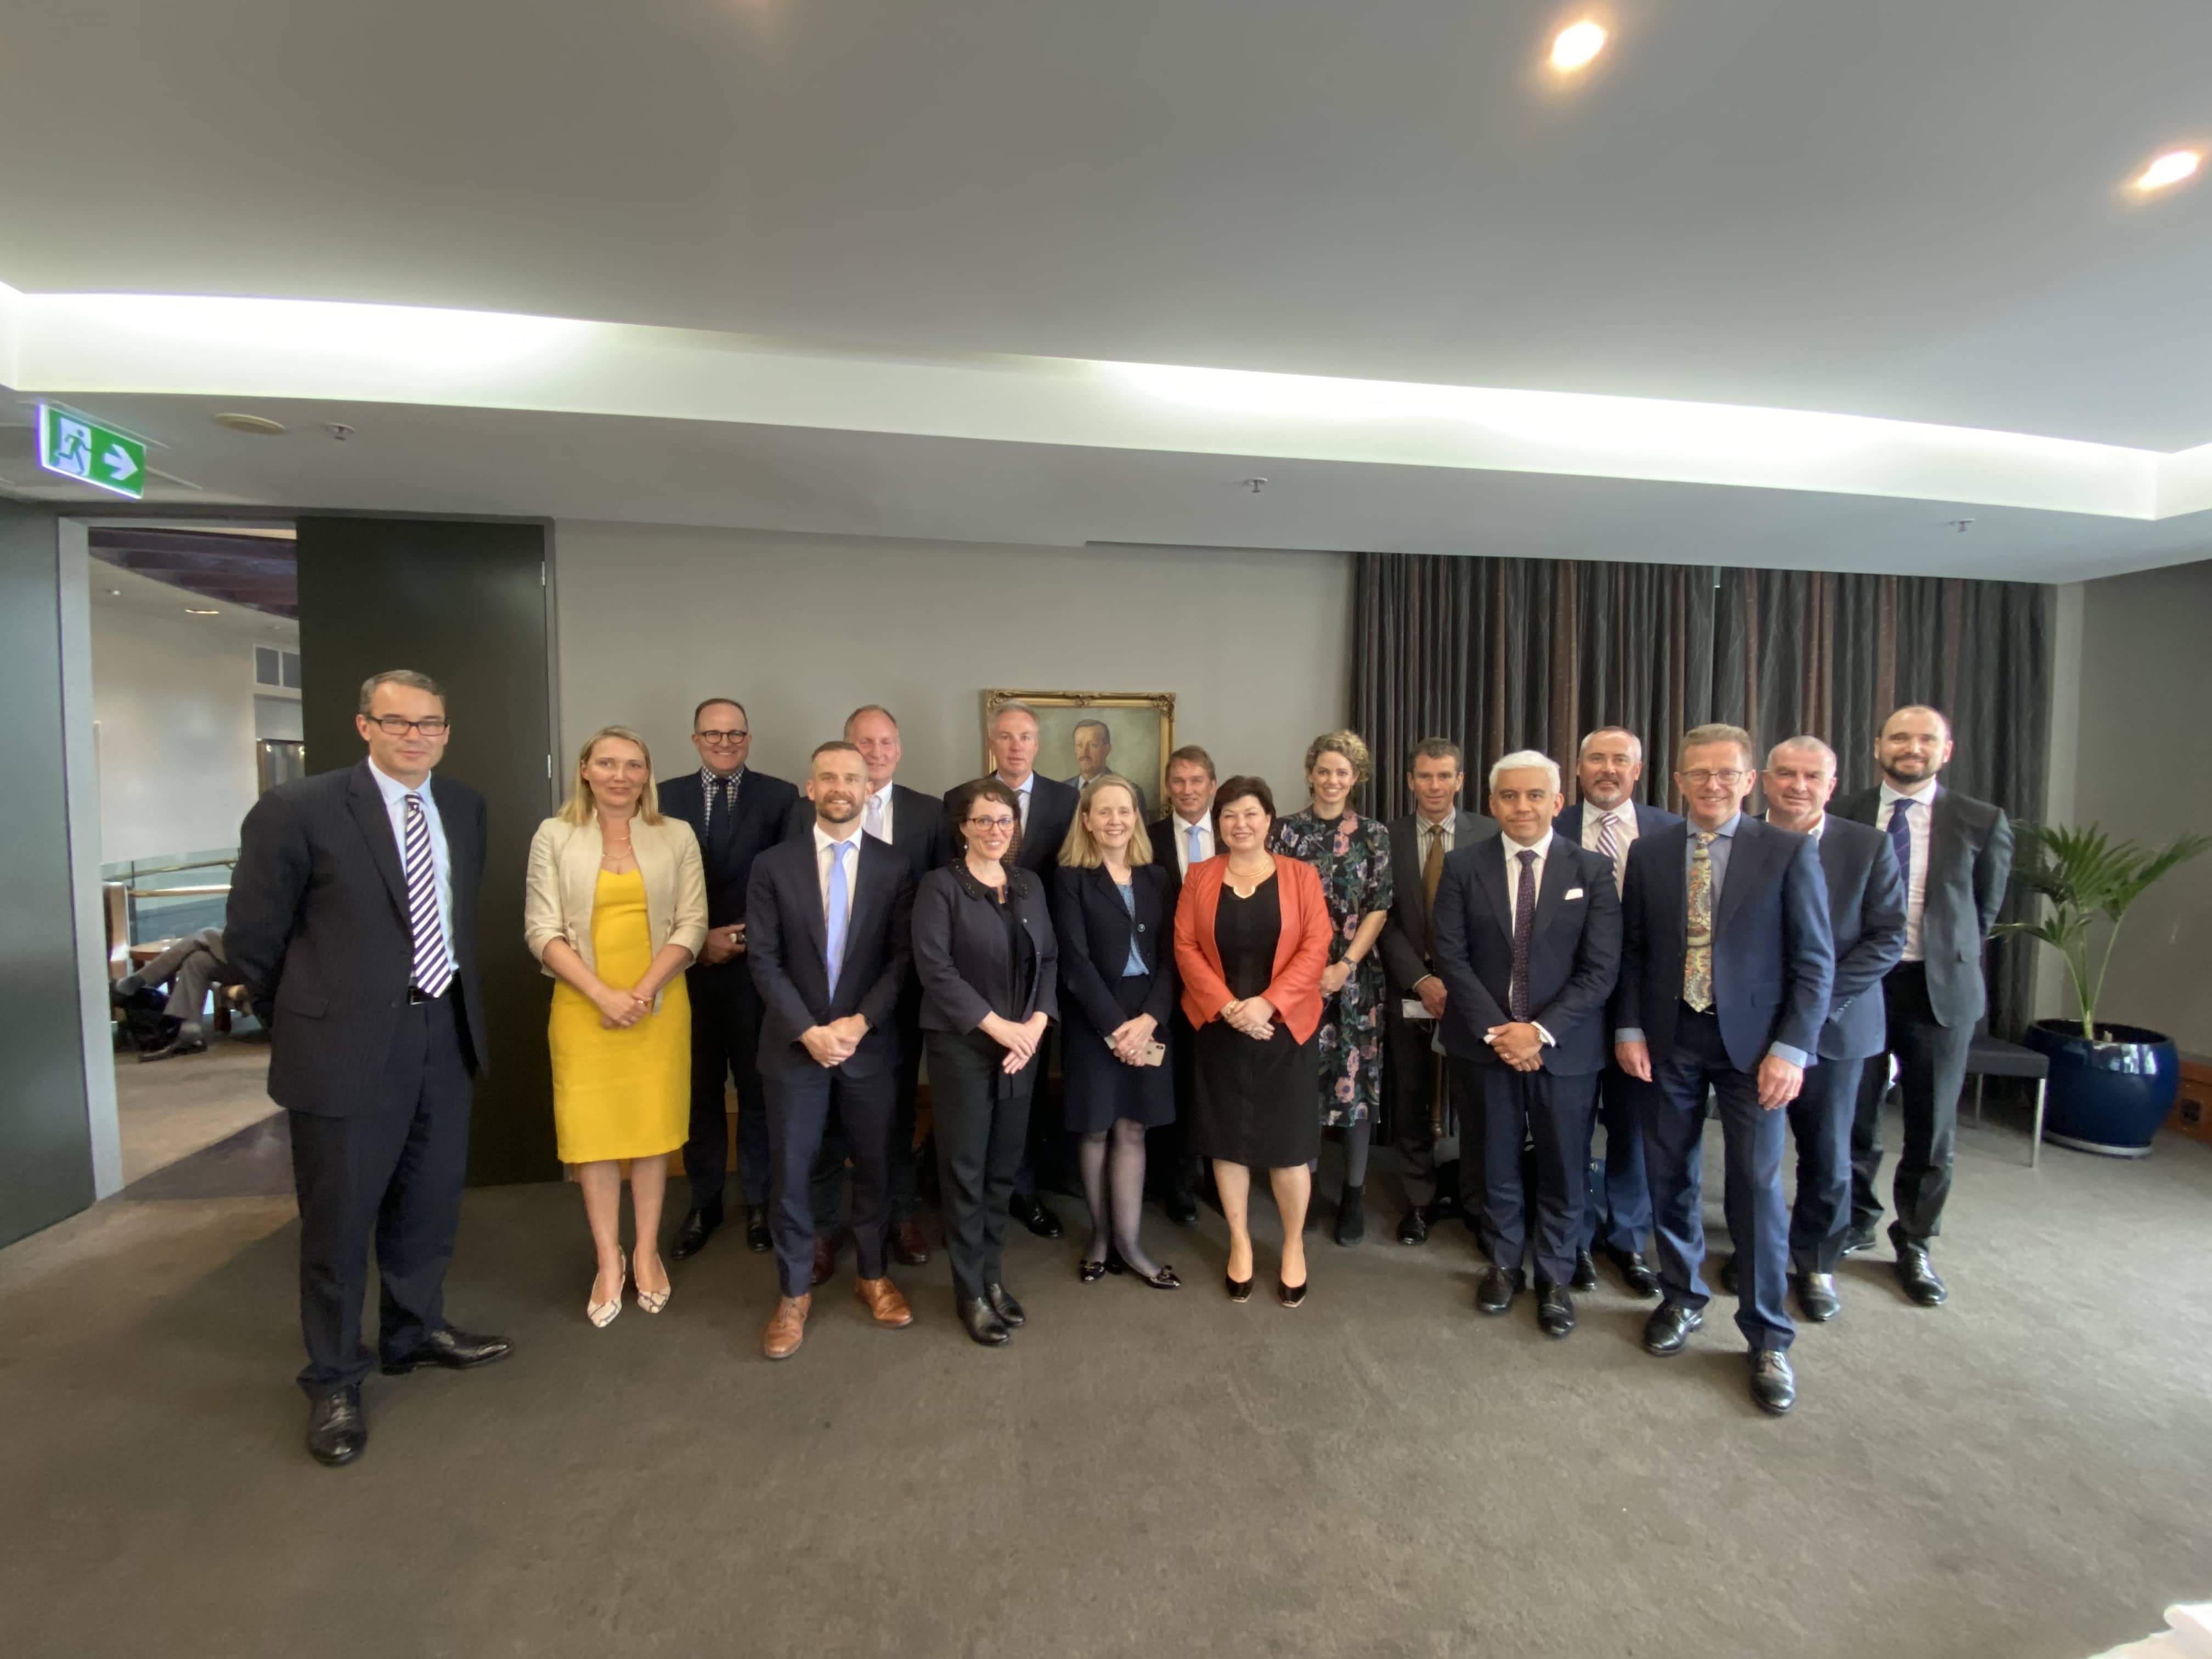 NZIBF Board meets on 25 November 2020